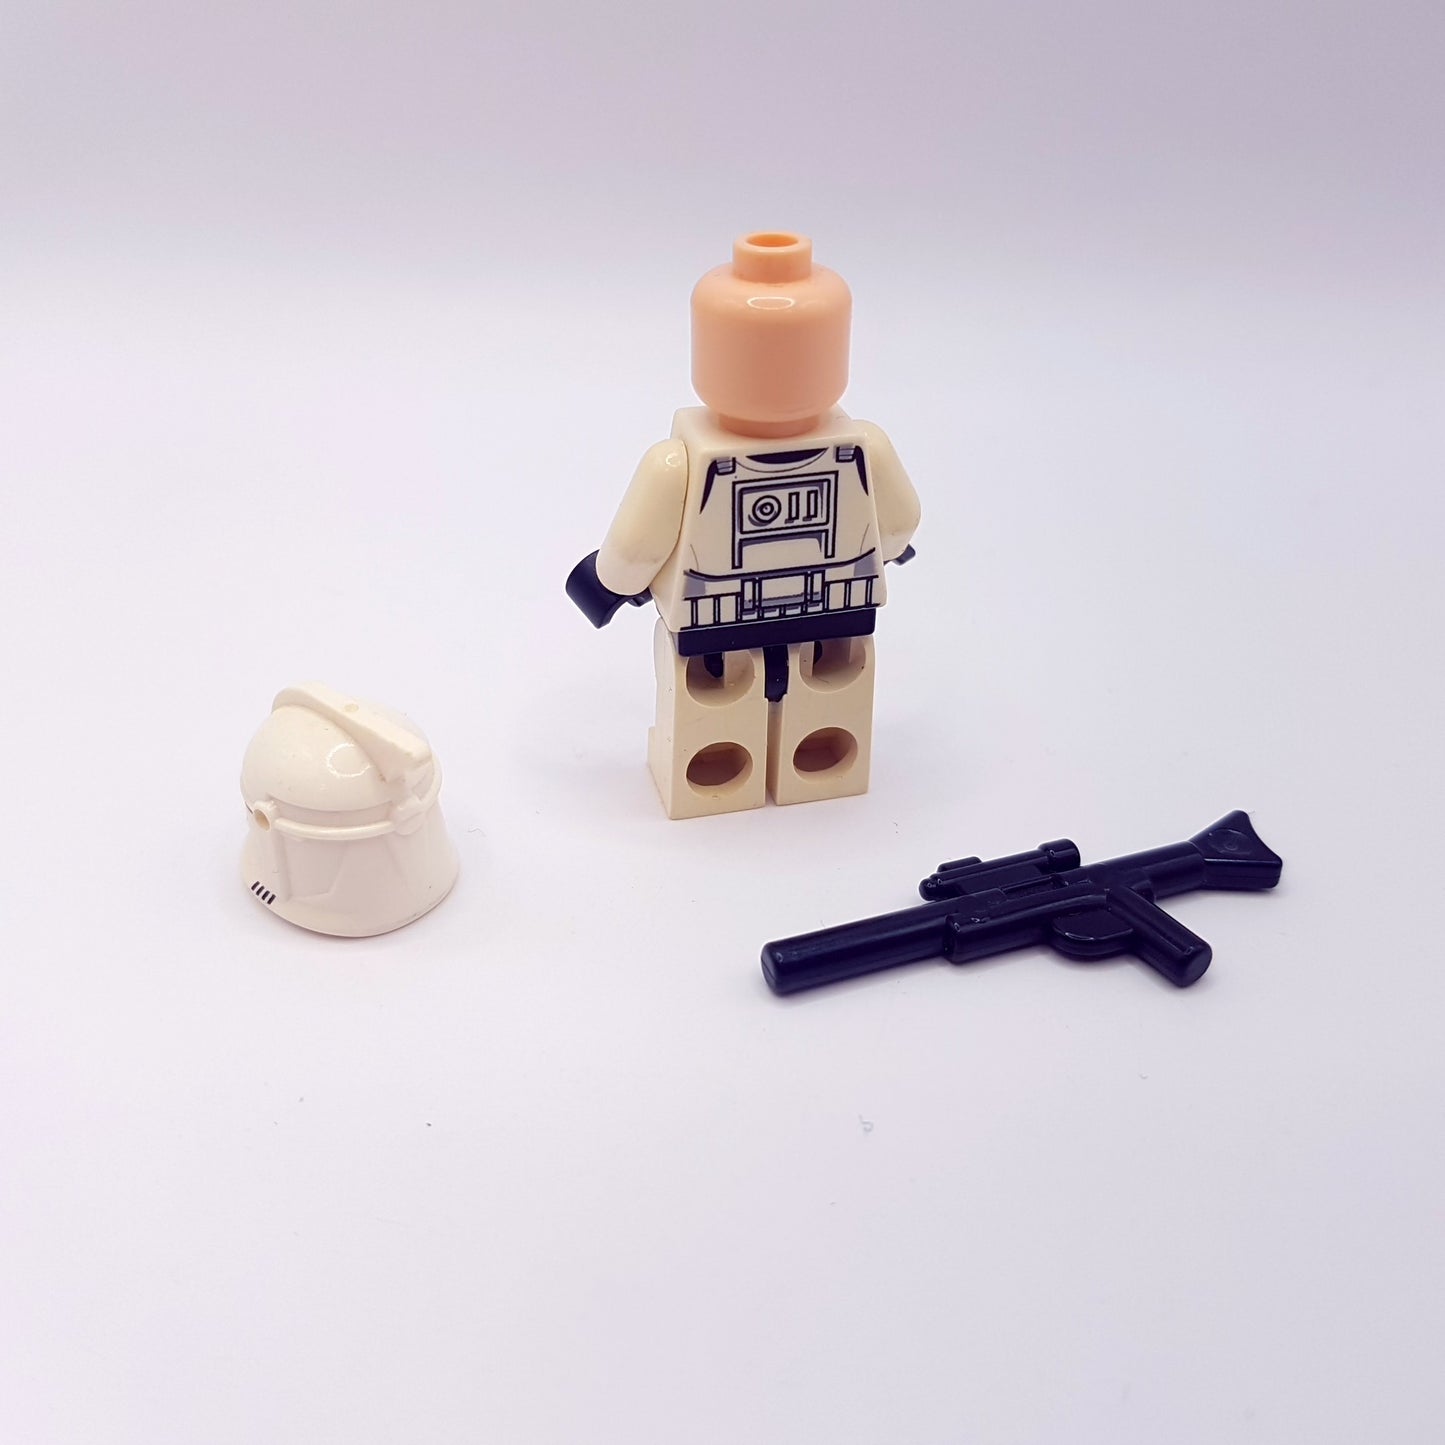 LEGO Minifigur - Clone Trooper sw0201 (2008) - Star Wars - gebraucht